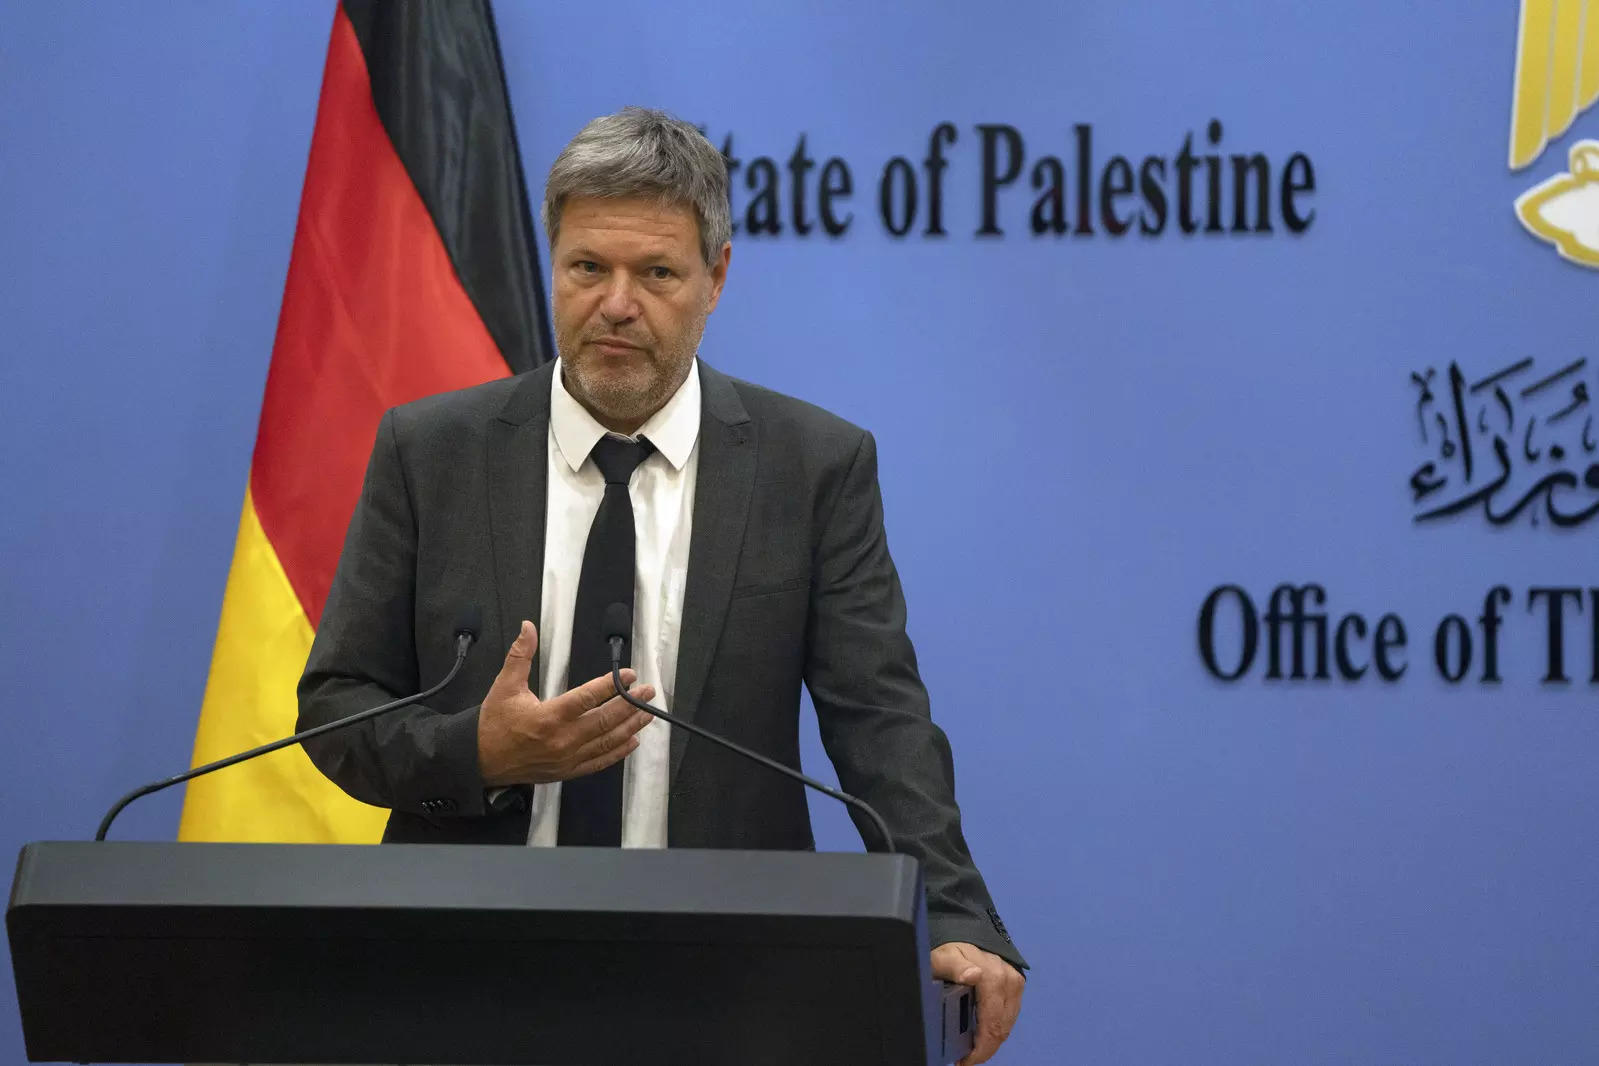   Le vice-chancelier allemand Robert Habeck (AP Photo/Nasser Nasser)